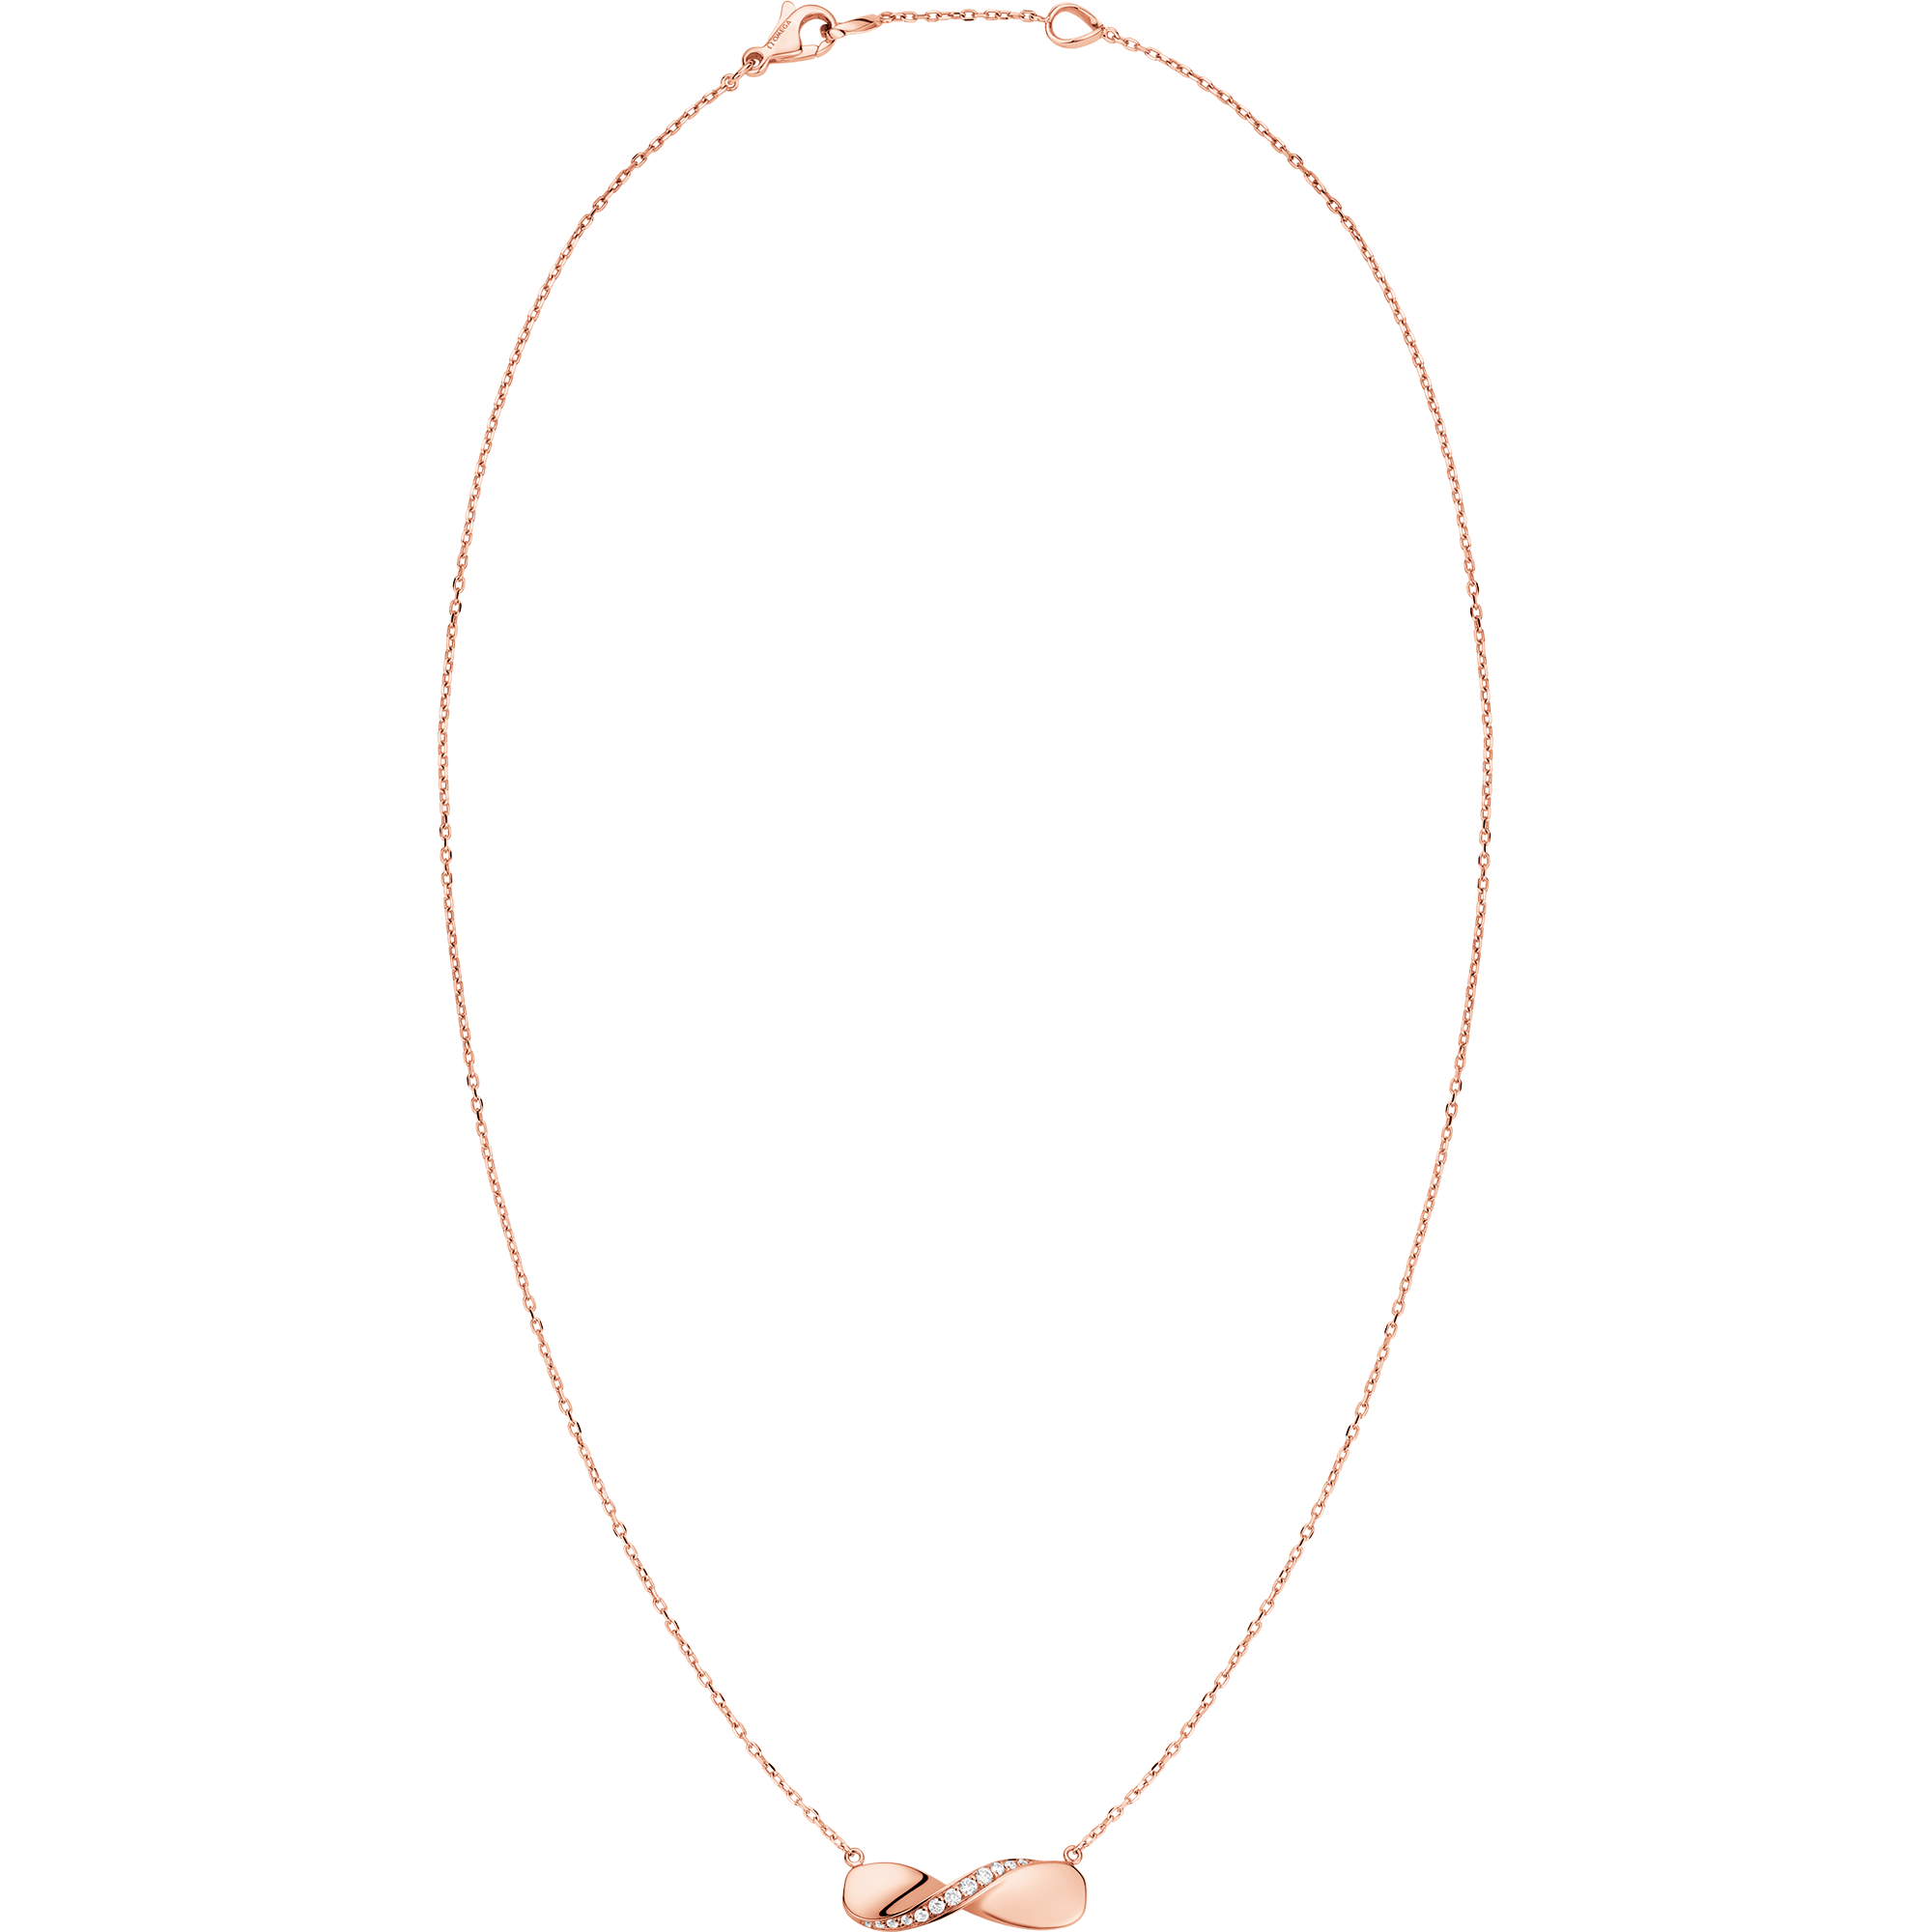 Aqua Swing Necklace, 18K red gold, Diamonds